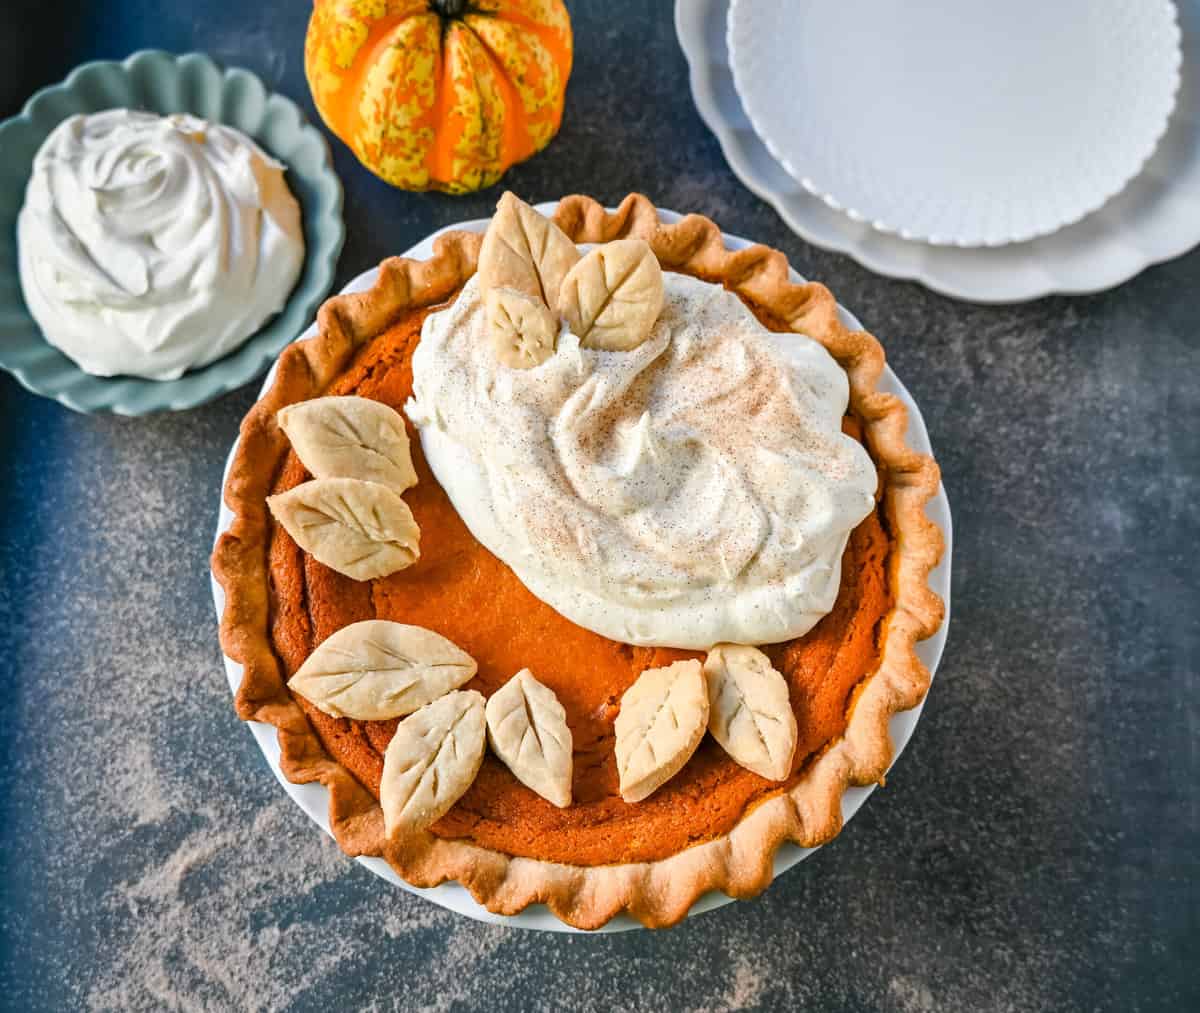 The Best Pumpkin Pie Recipe. Award-winning creamy pumpkin pie recipe has a secret ingredient to make it extra special! This is the best pumpkin pie recipe and won the best pumpkin pie on the internet!